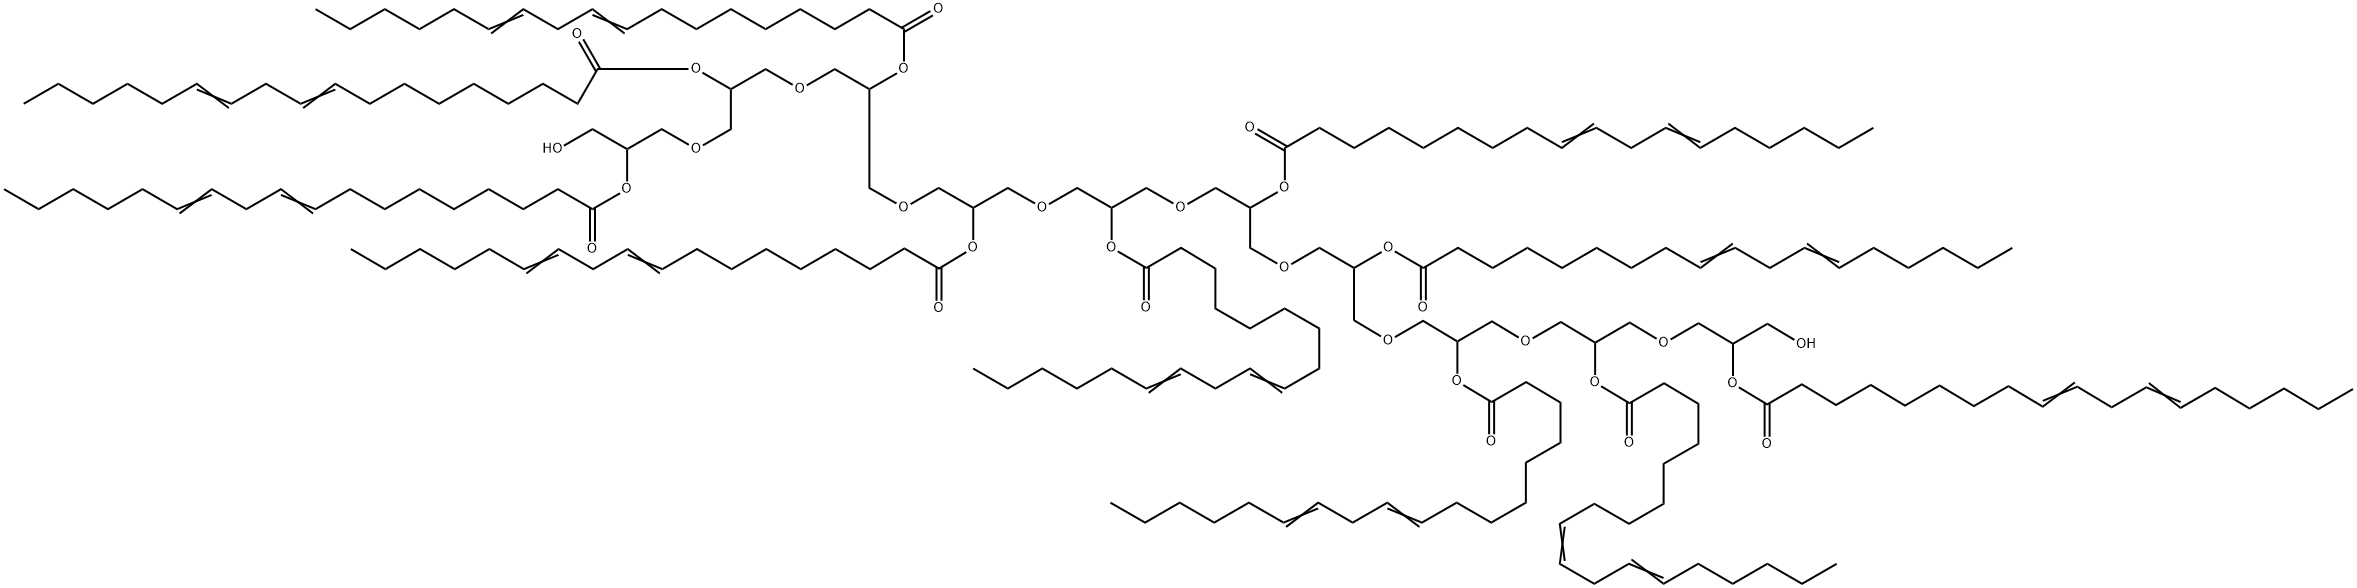 glycerol, decamer, deca(octadeca-9,12-dienoate) Structure